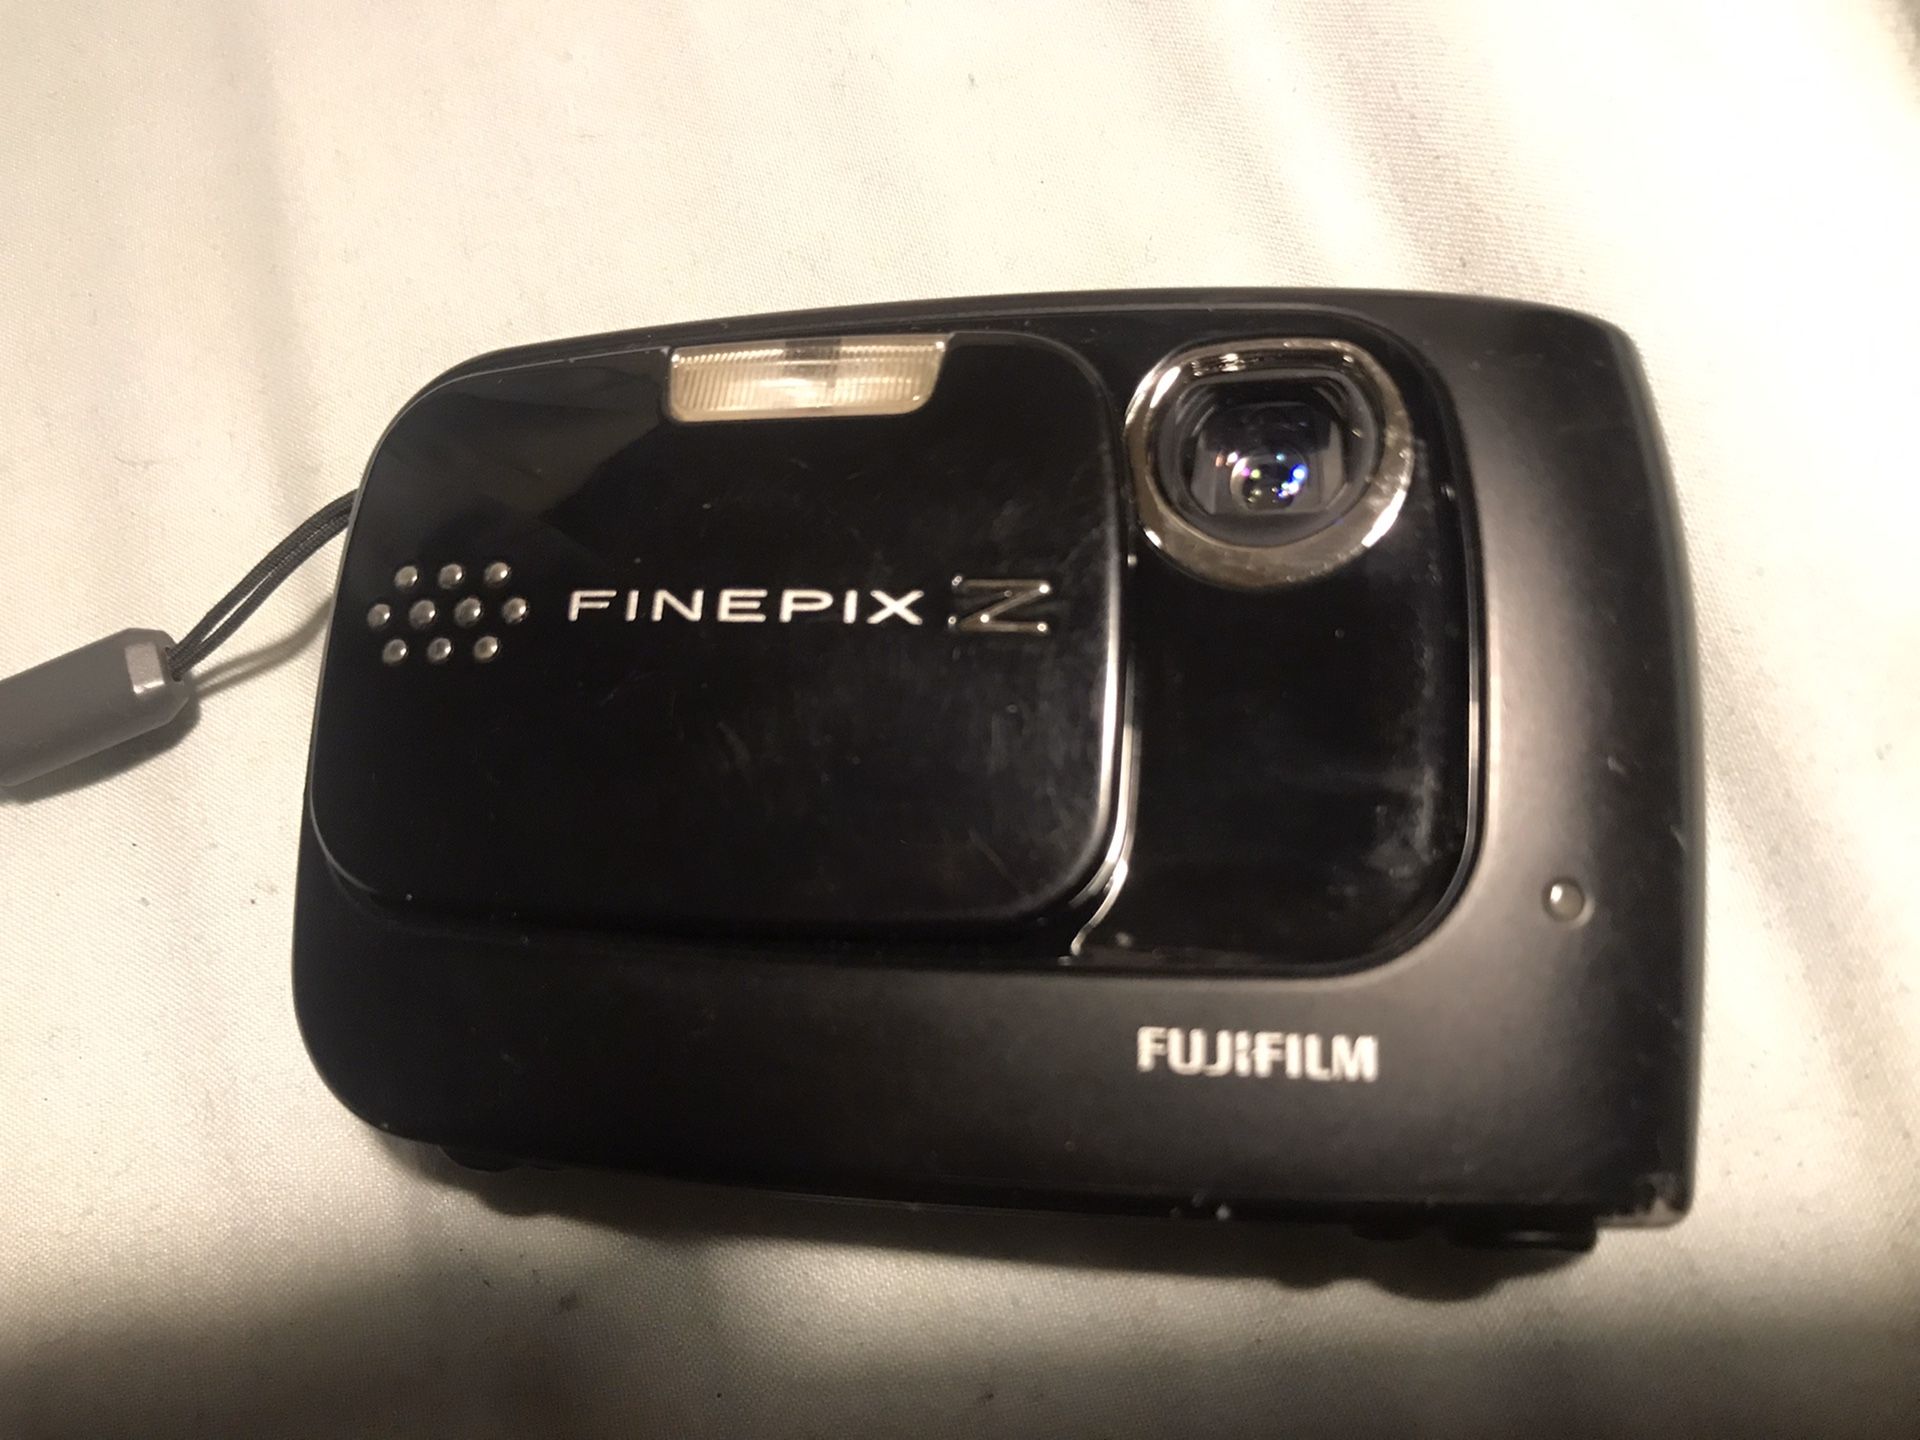 Fujifilm Finepix Z digital camera